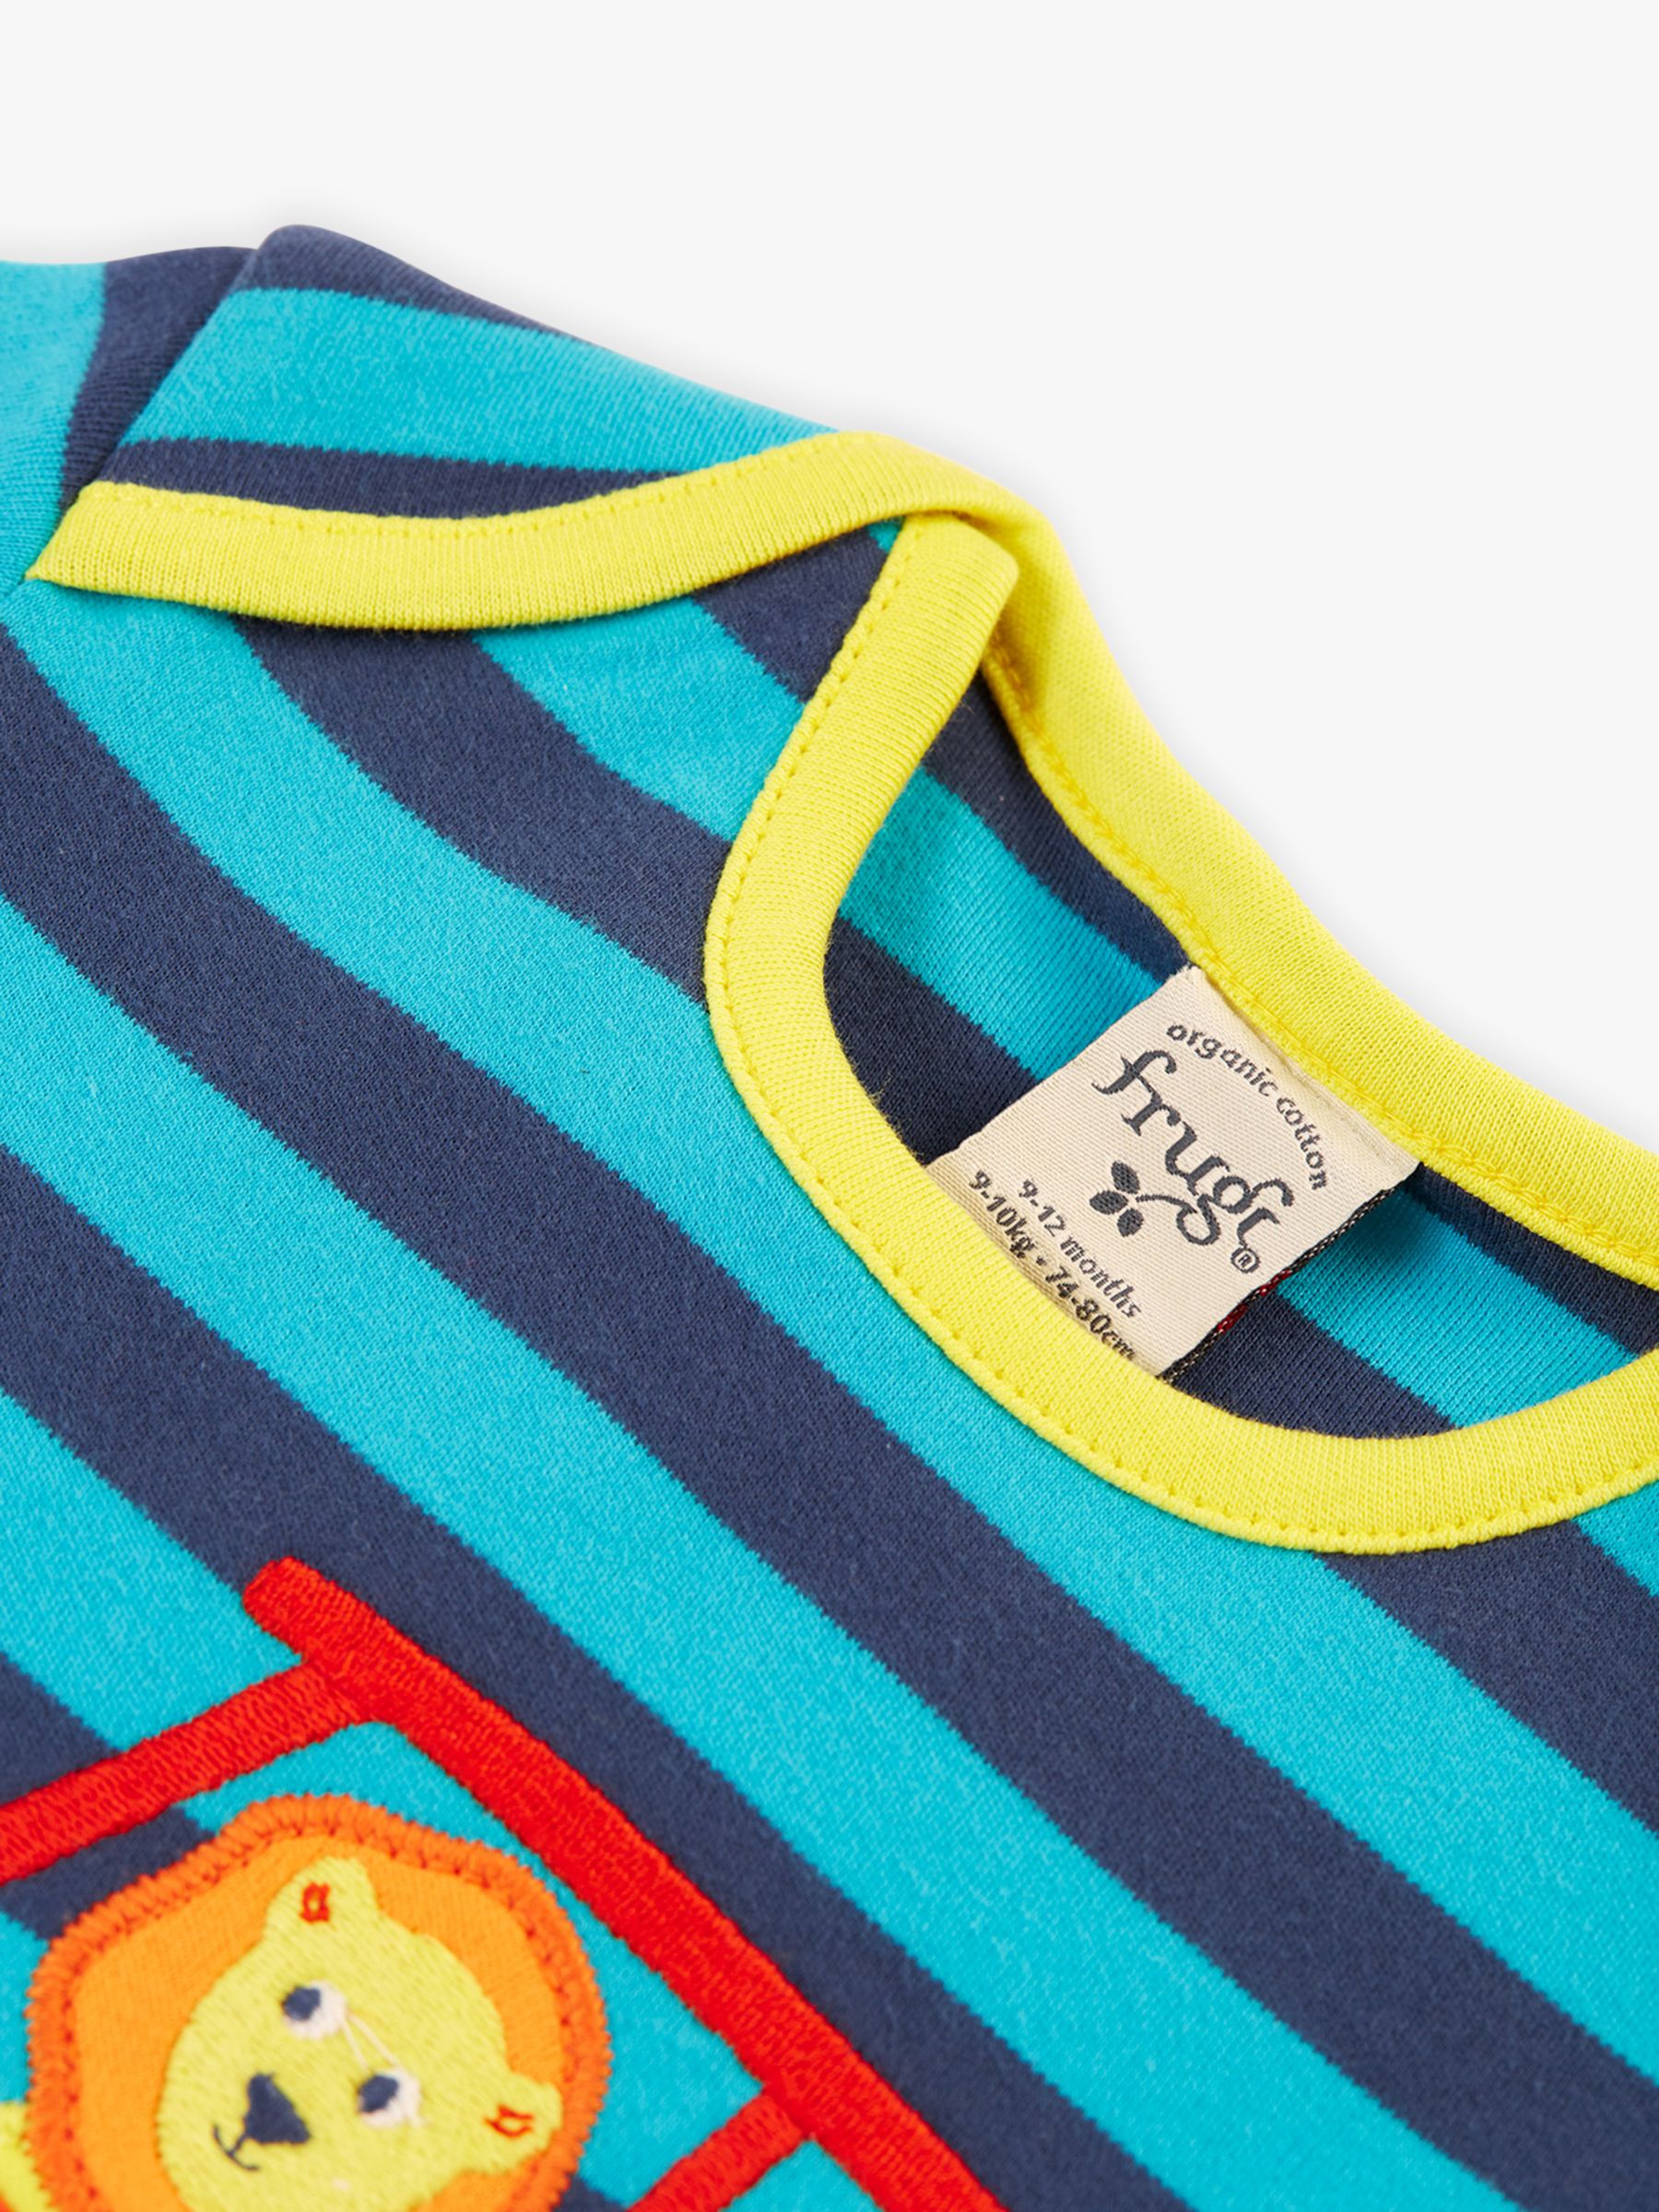 Buy Frugi Baby Bobster Applique & Stripe Organic Cotton T-shirt, Multi Online at johnlewis.com